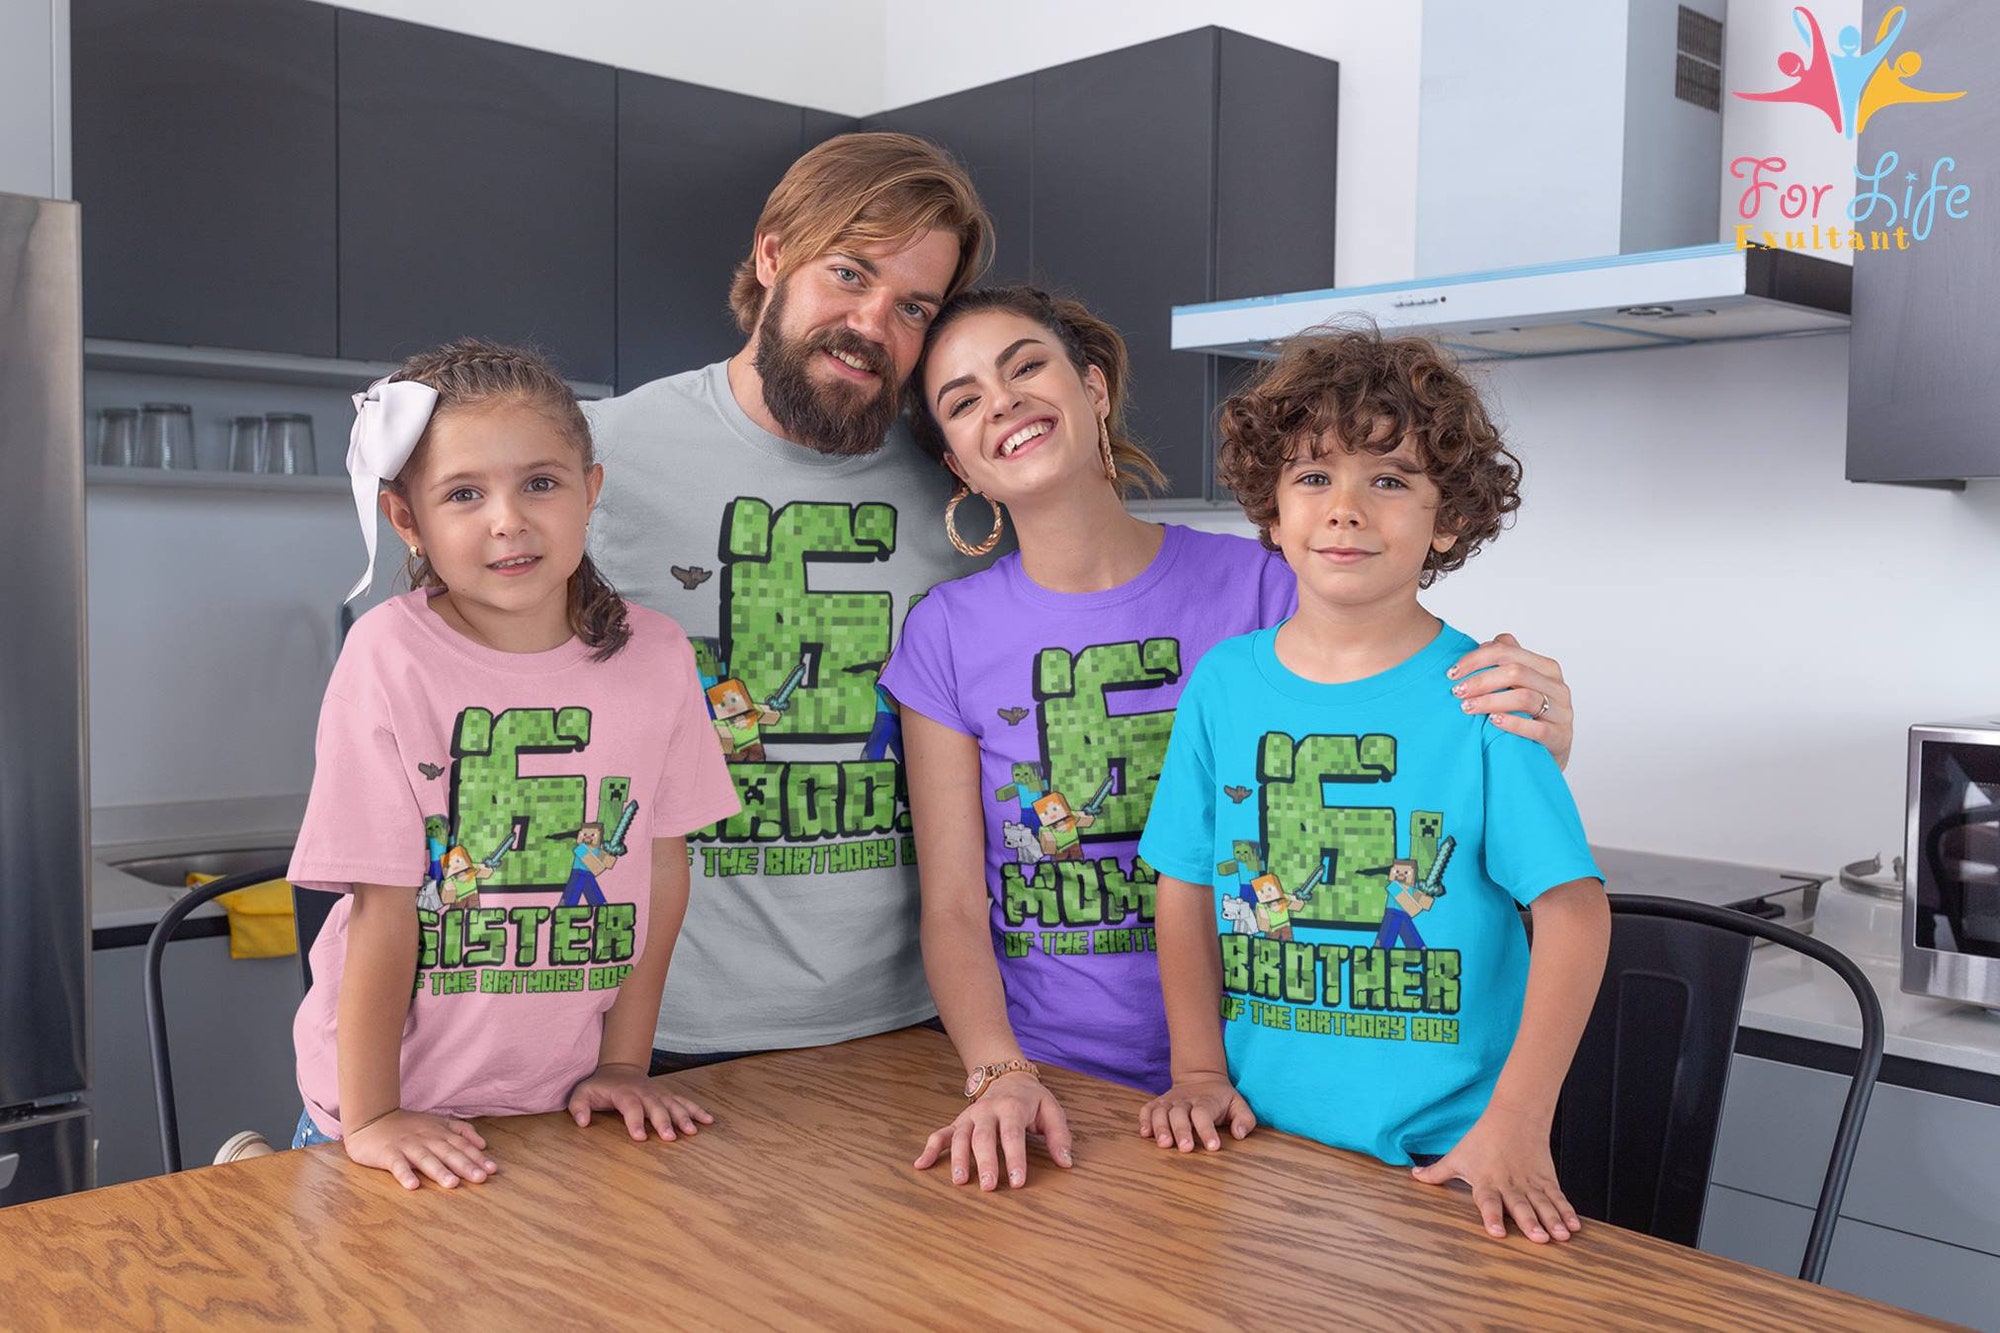 Minecraft Group Shot Birthday Theme Matching T-Shirt